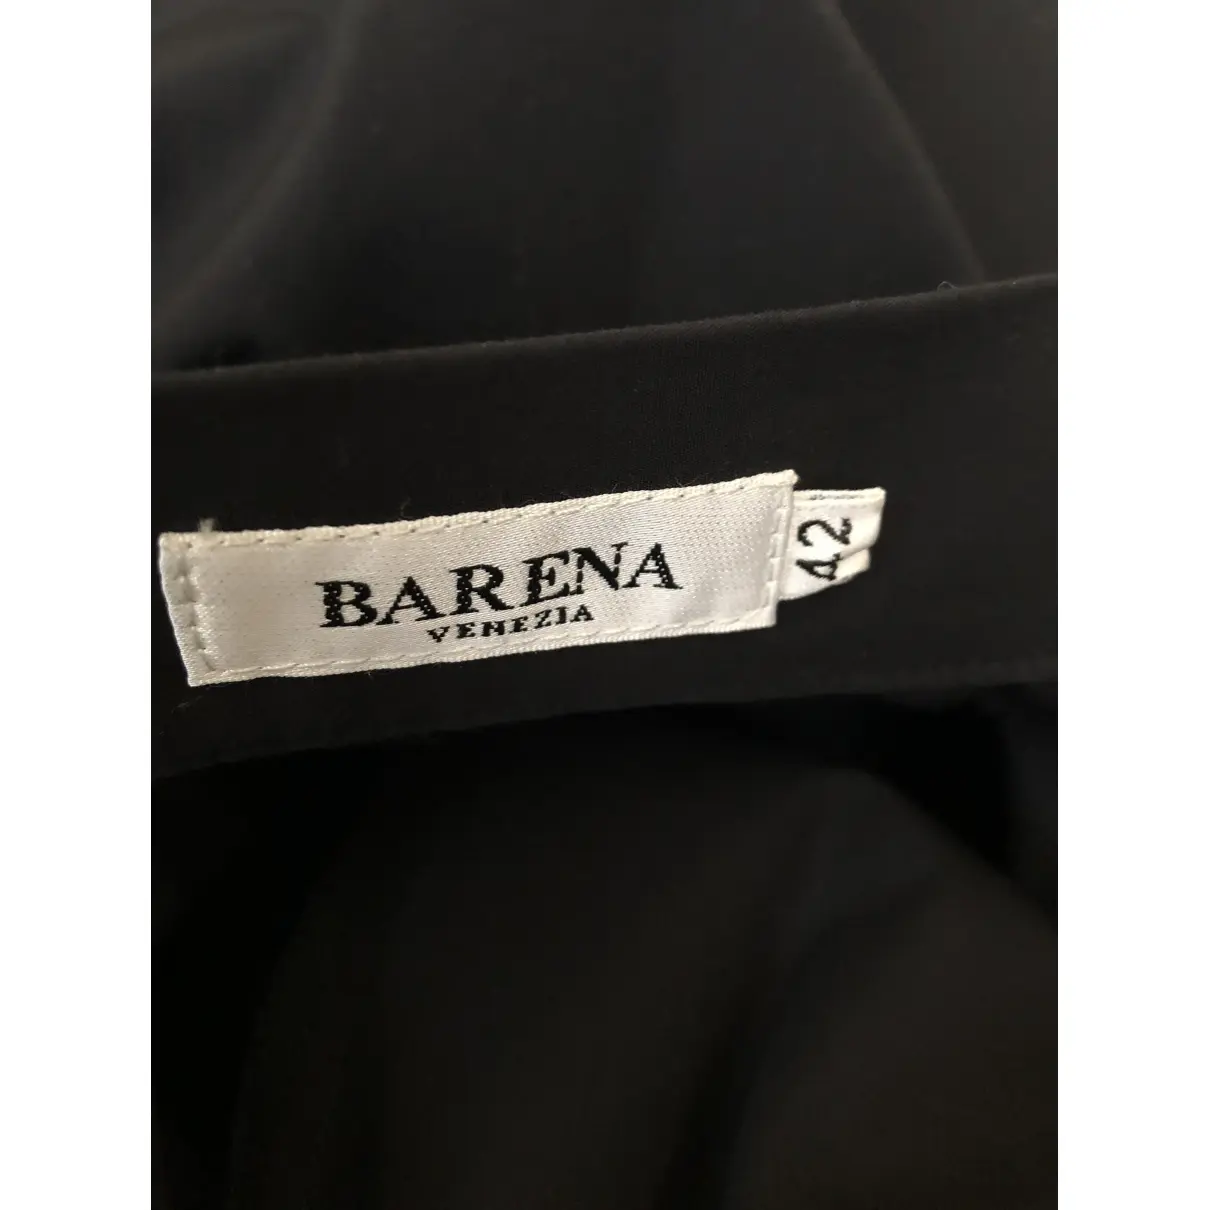 Buy Barena Venezia Maxi skirt online